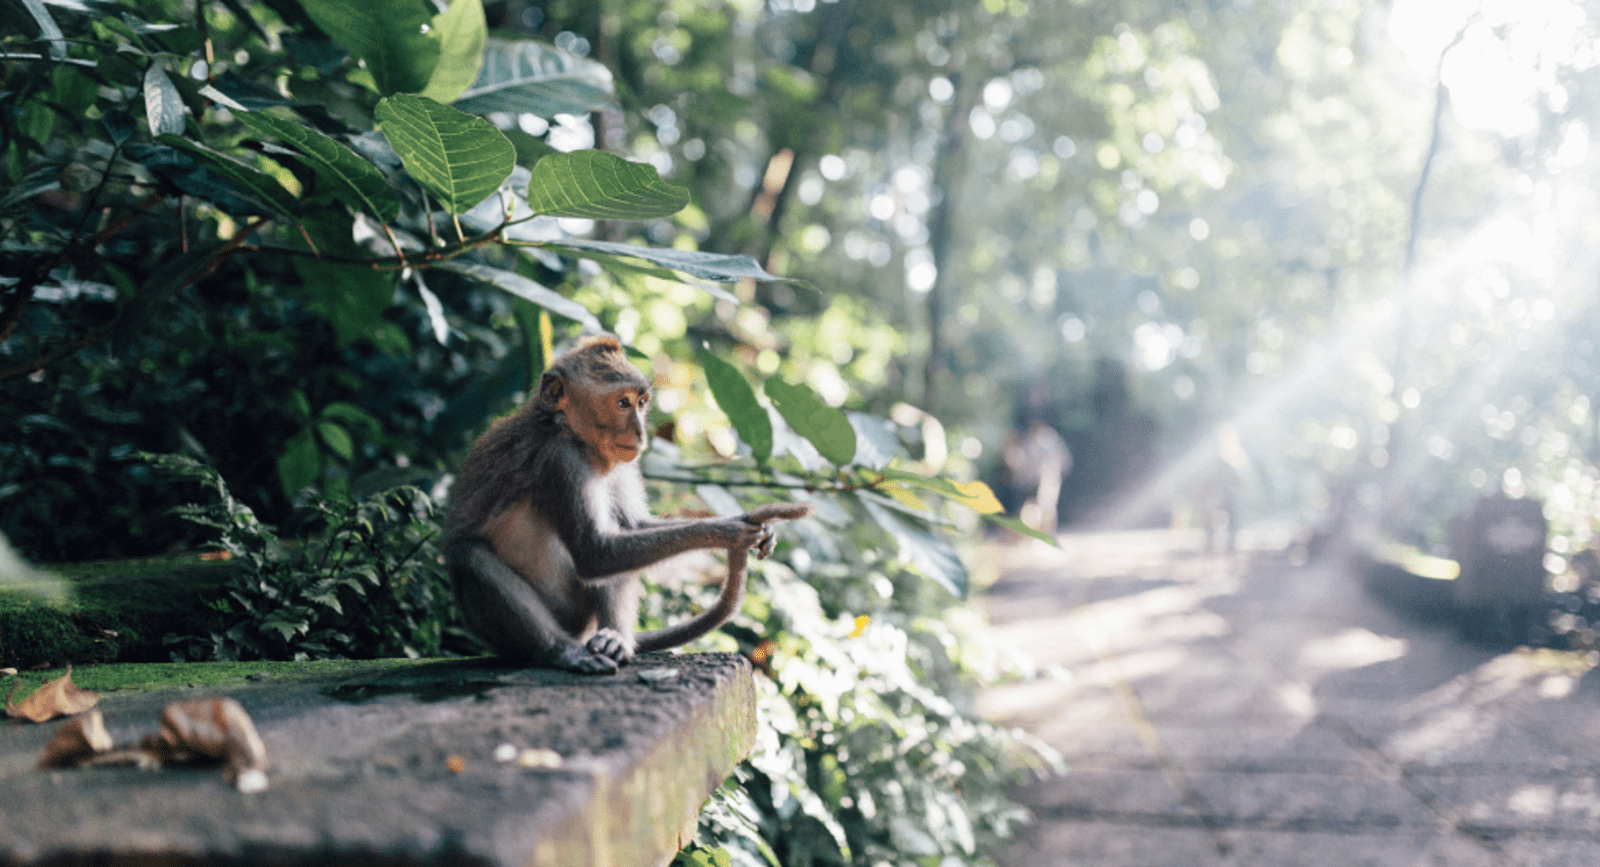 Ubud Monkey Forest in Indonesia